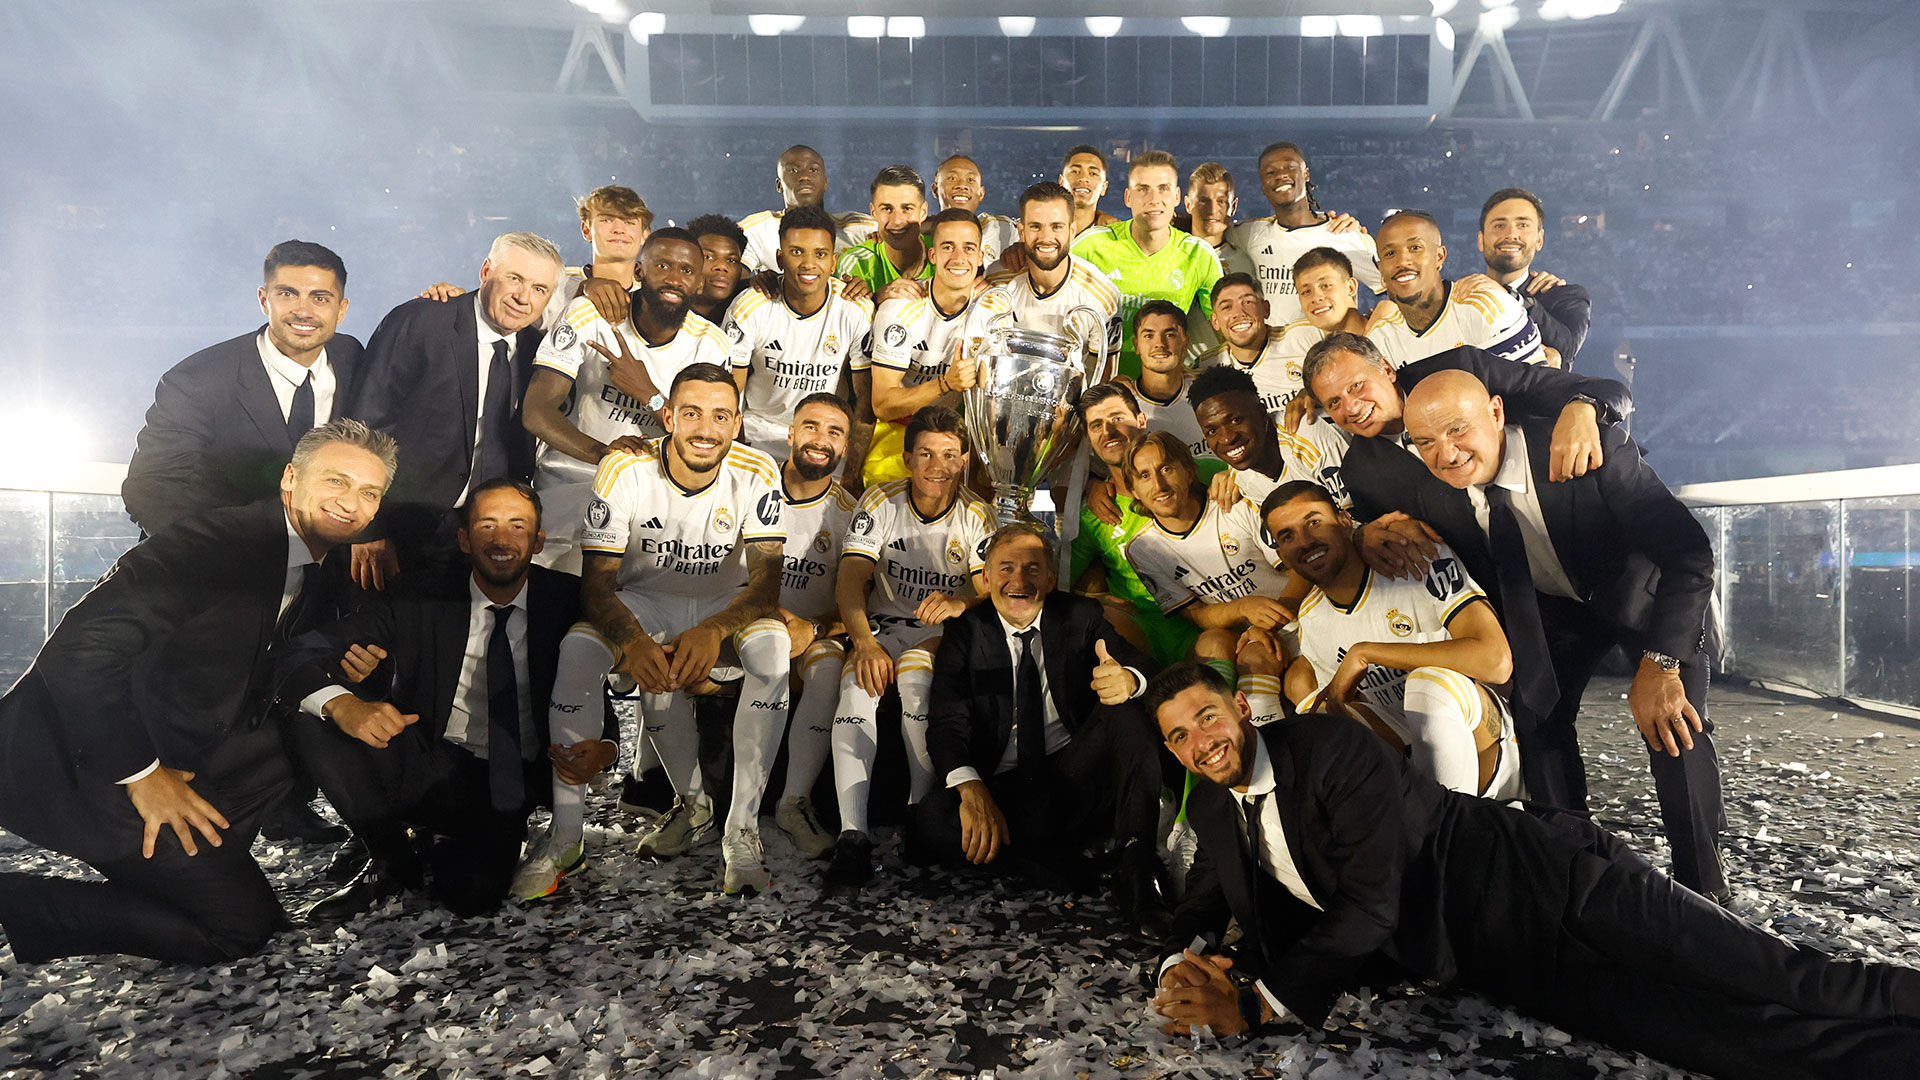 The Santiago Bernabéu rocked with the European Champion's Party